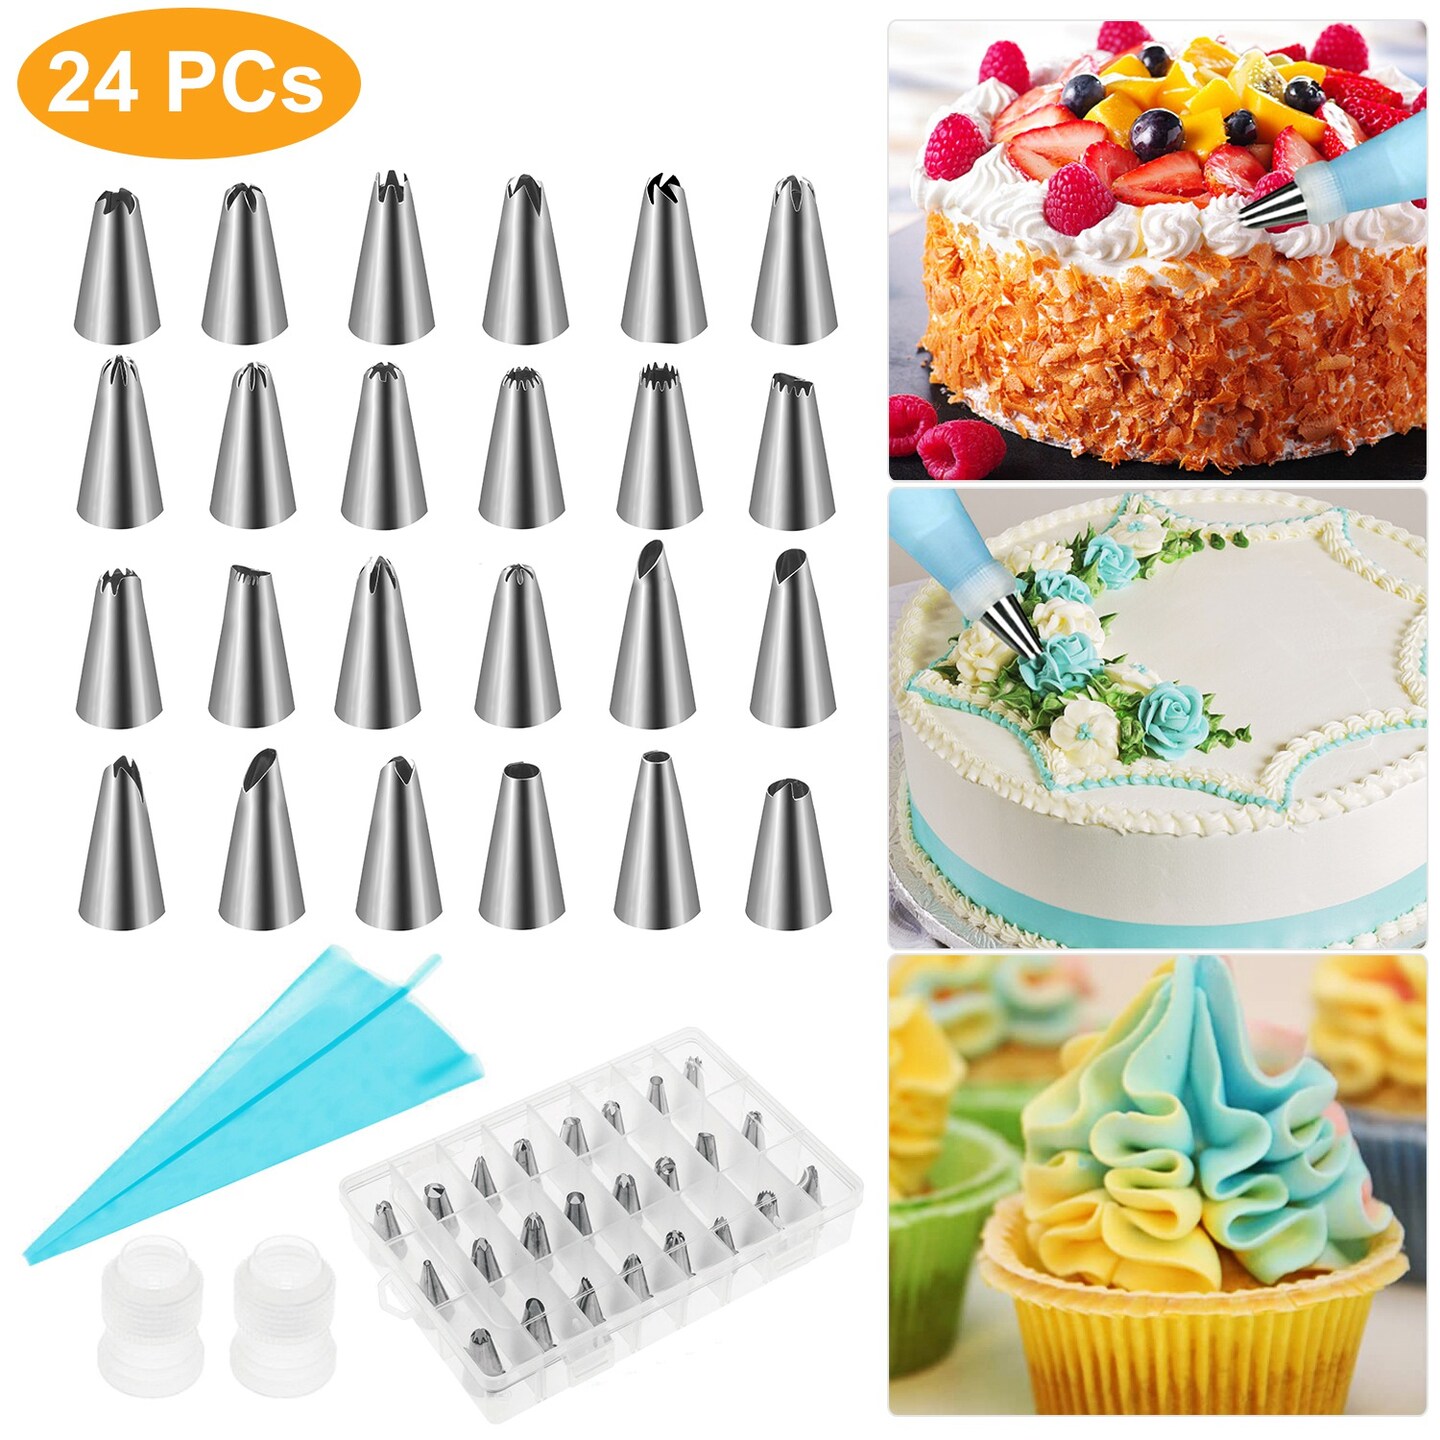 Eggracks by Global Phoenix 24Pcs Cake Decorating Supplies kit